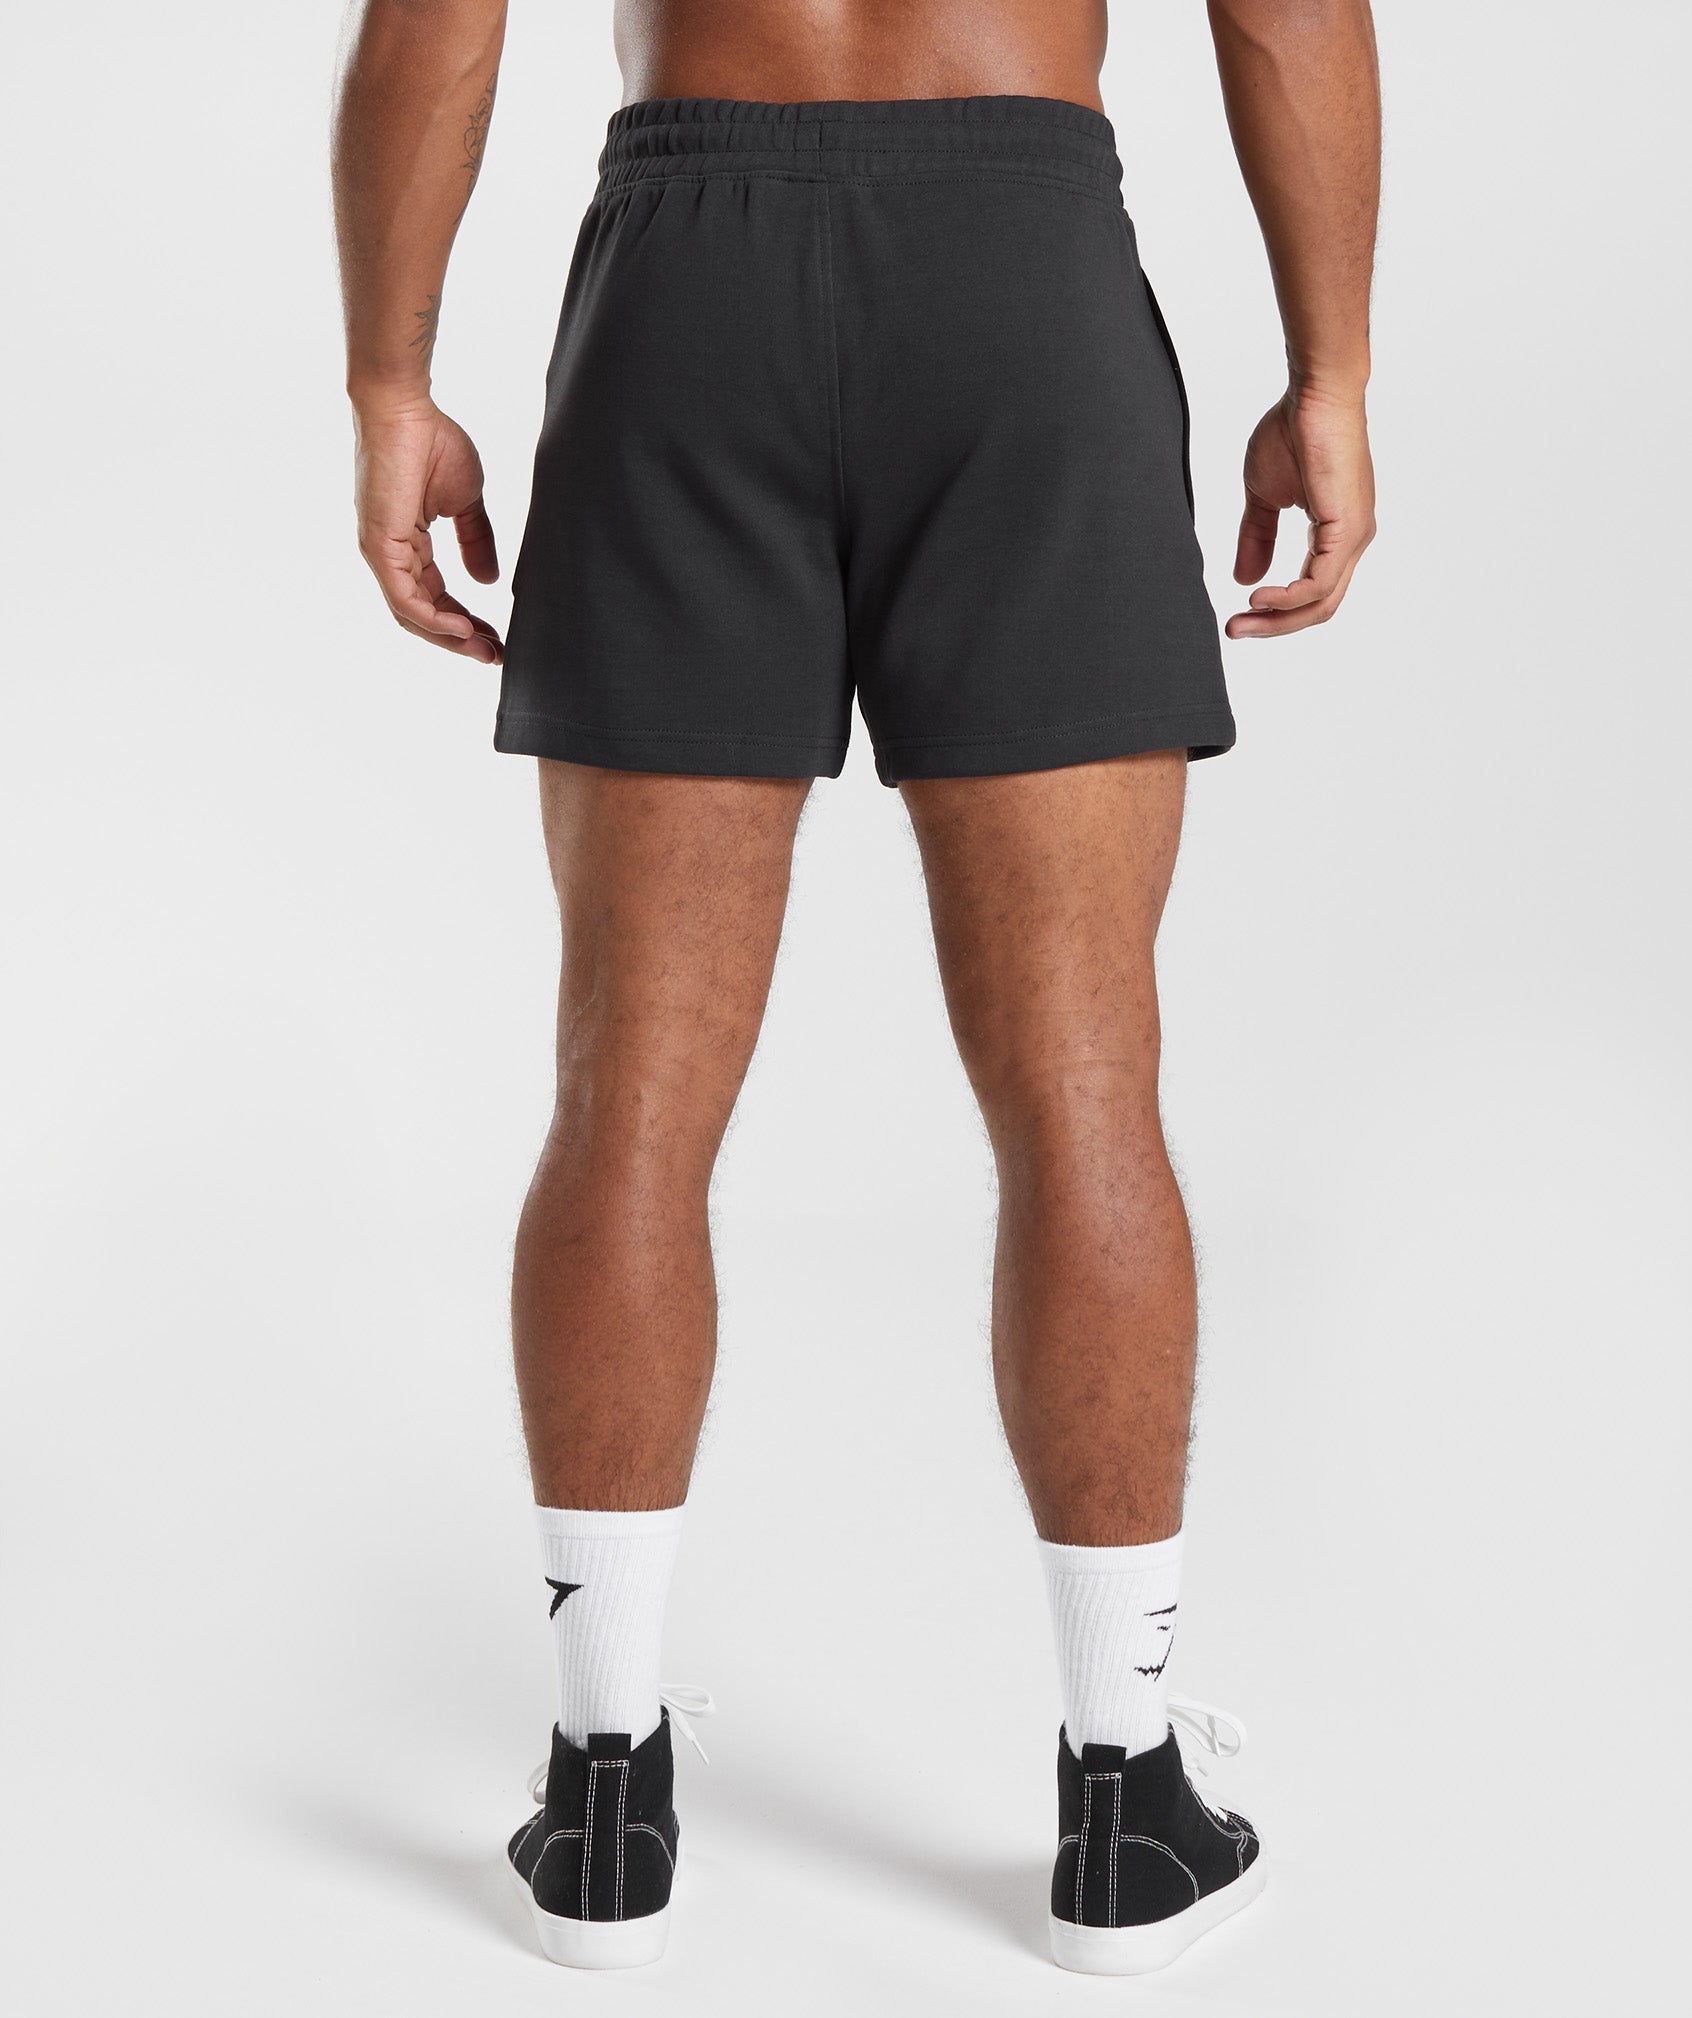 React 5" Shorts in Black